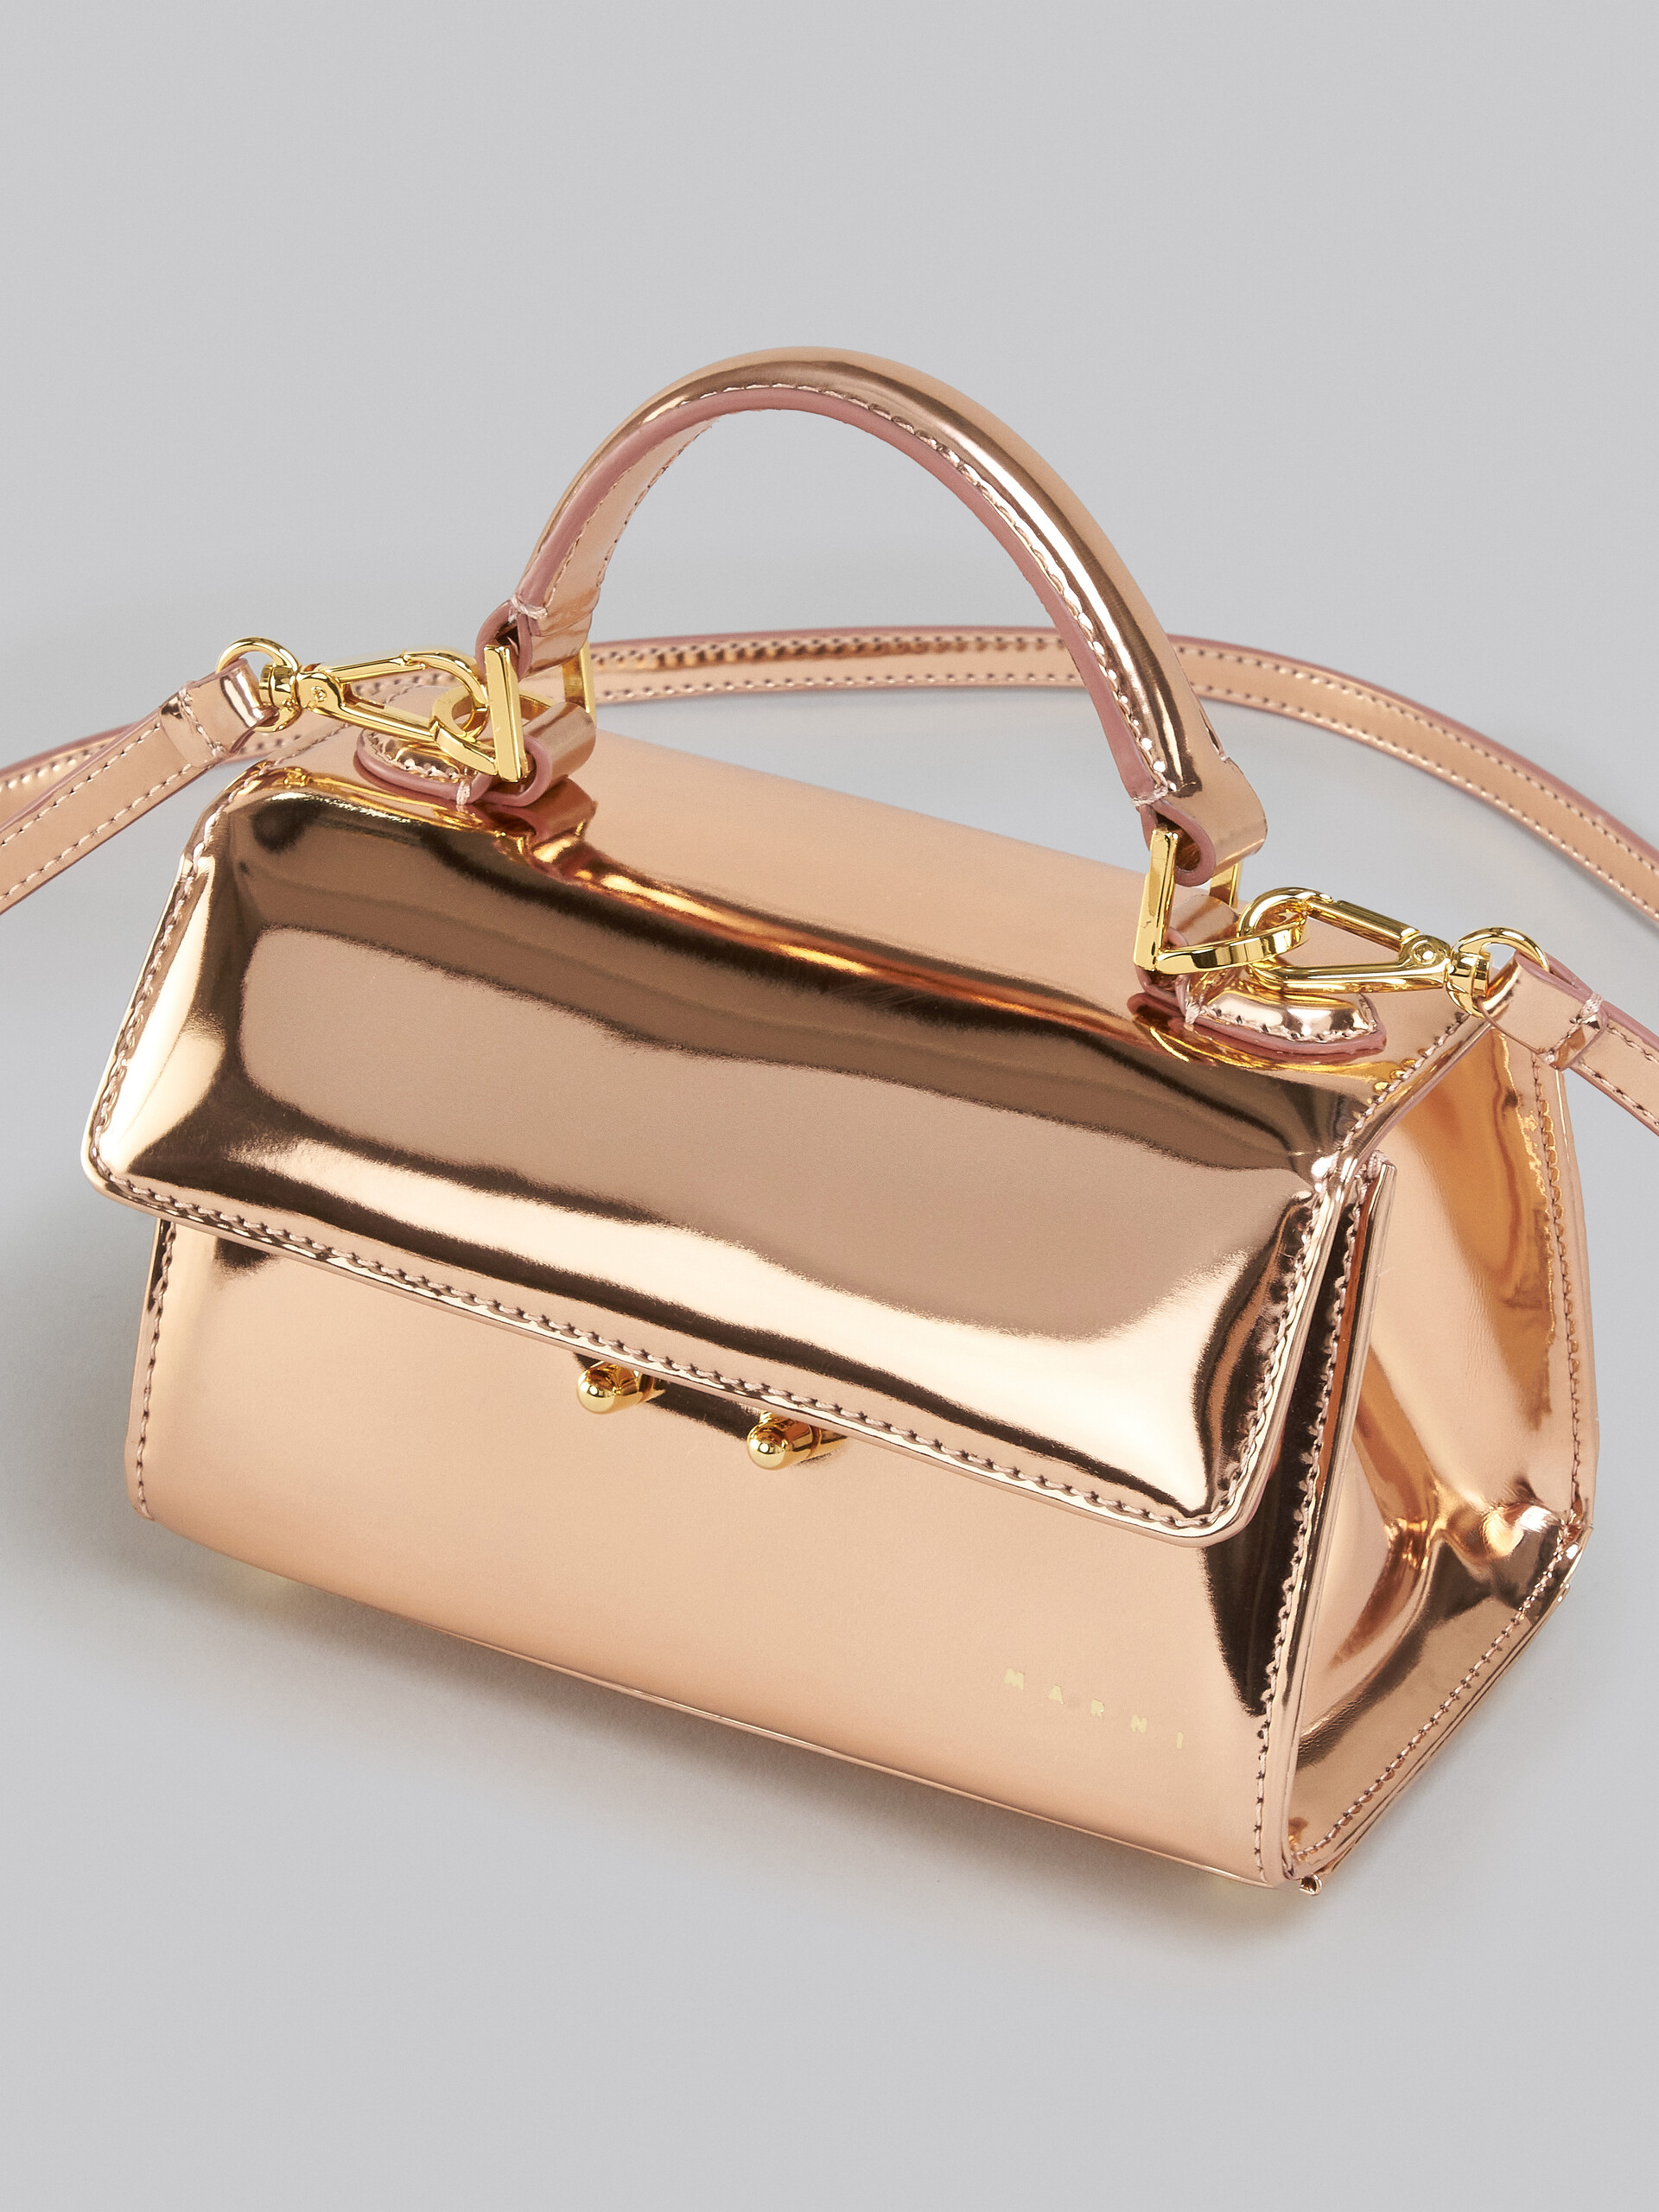 Relativity Mini Bag in pink mirrored leather - Handbag - Image 4